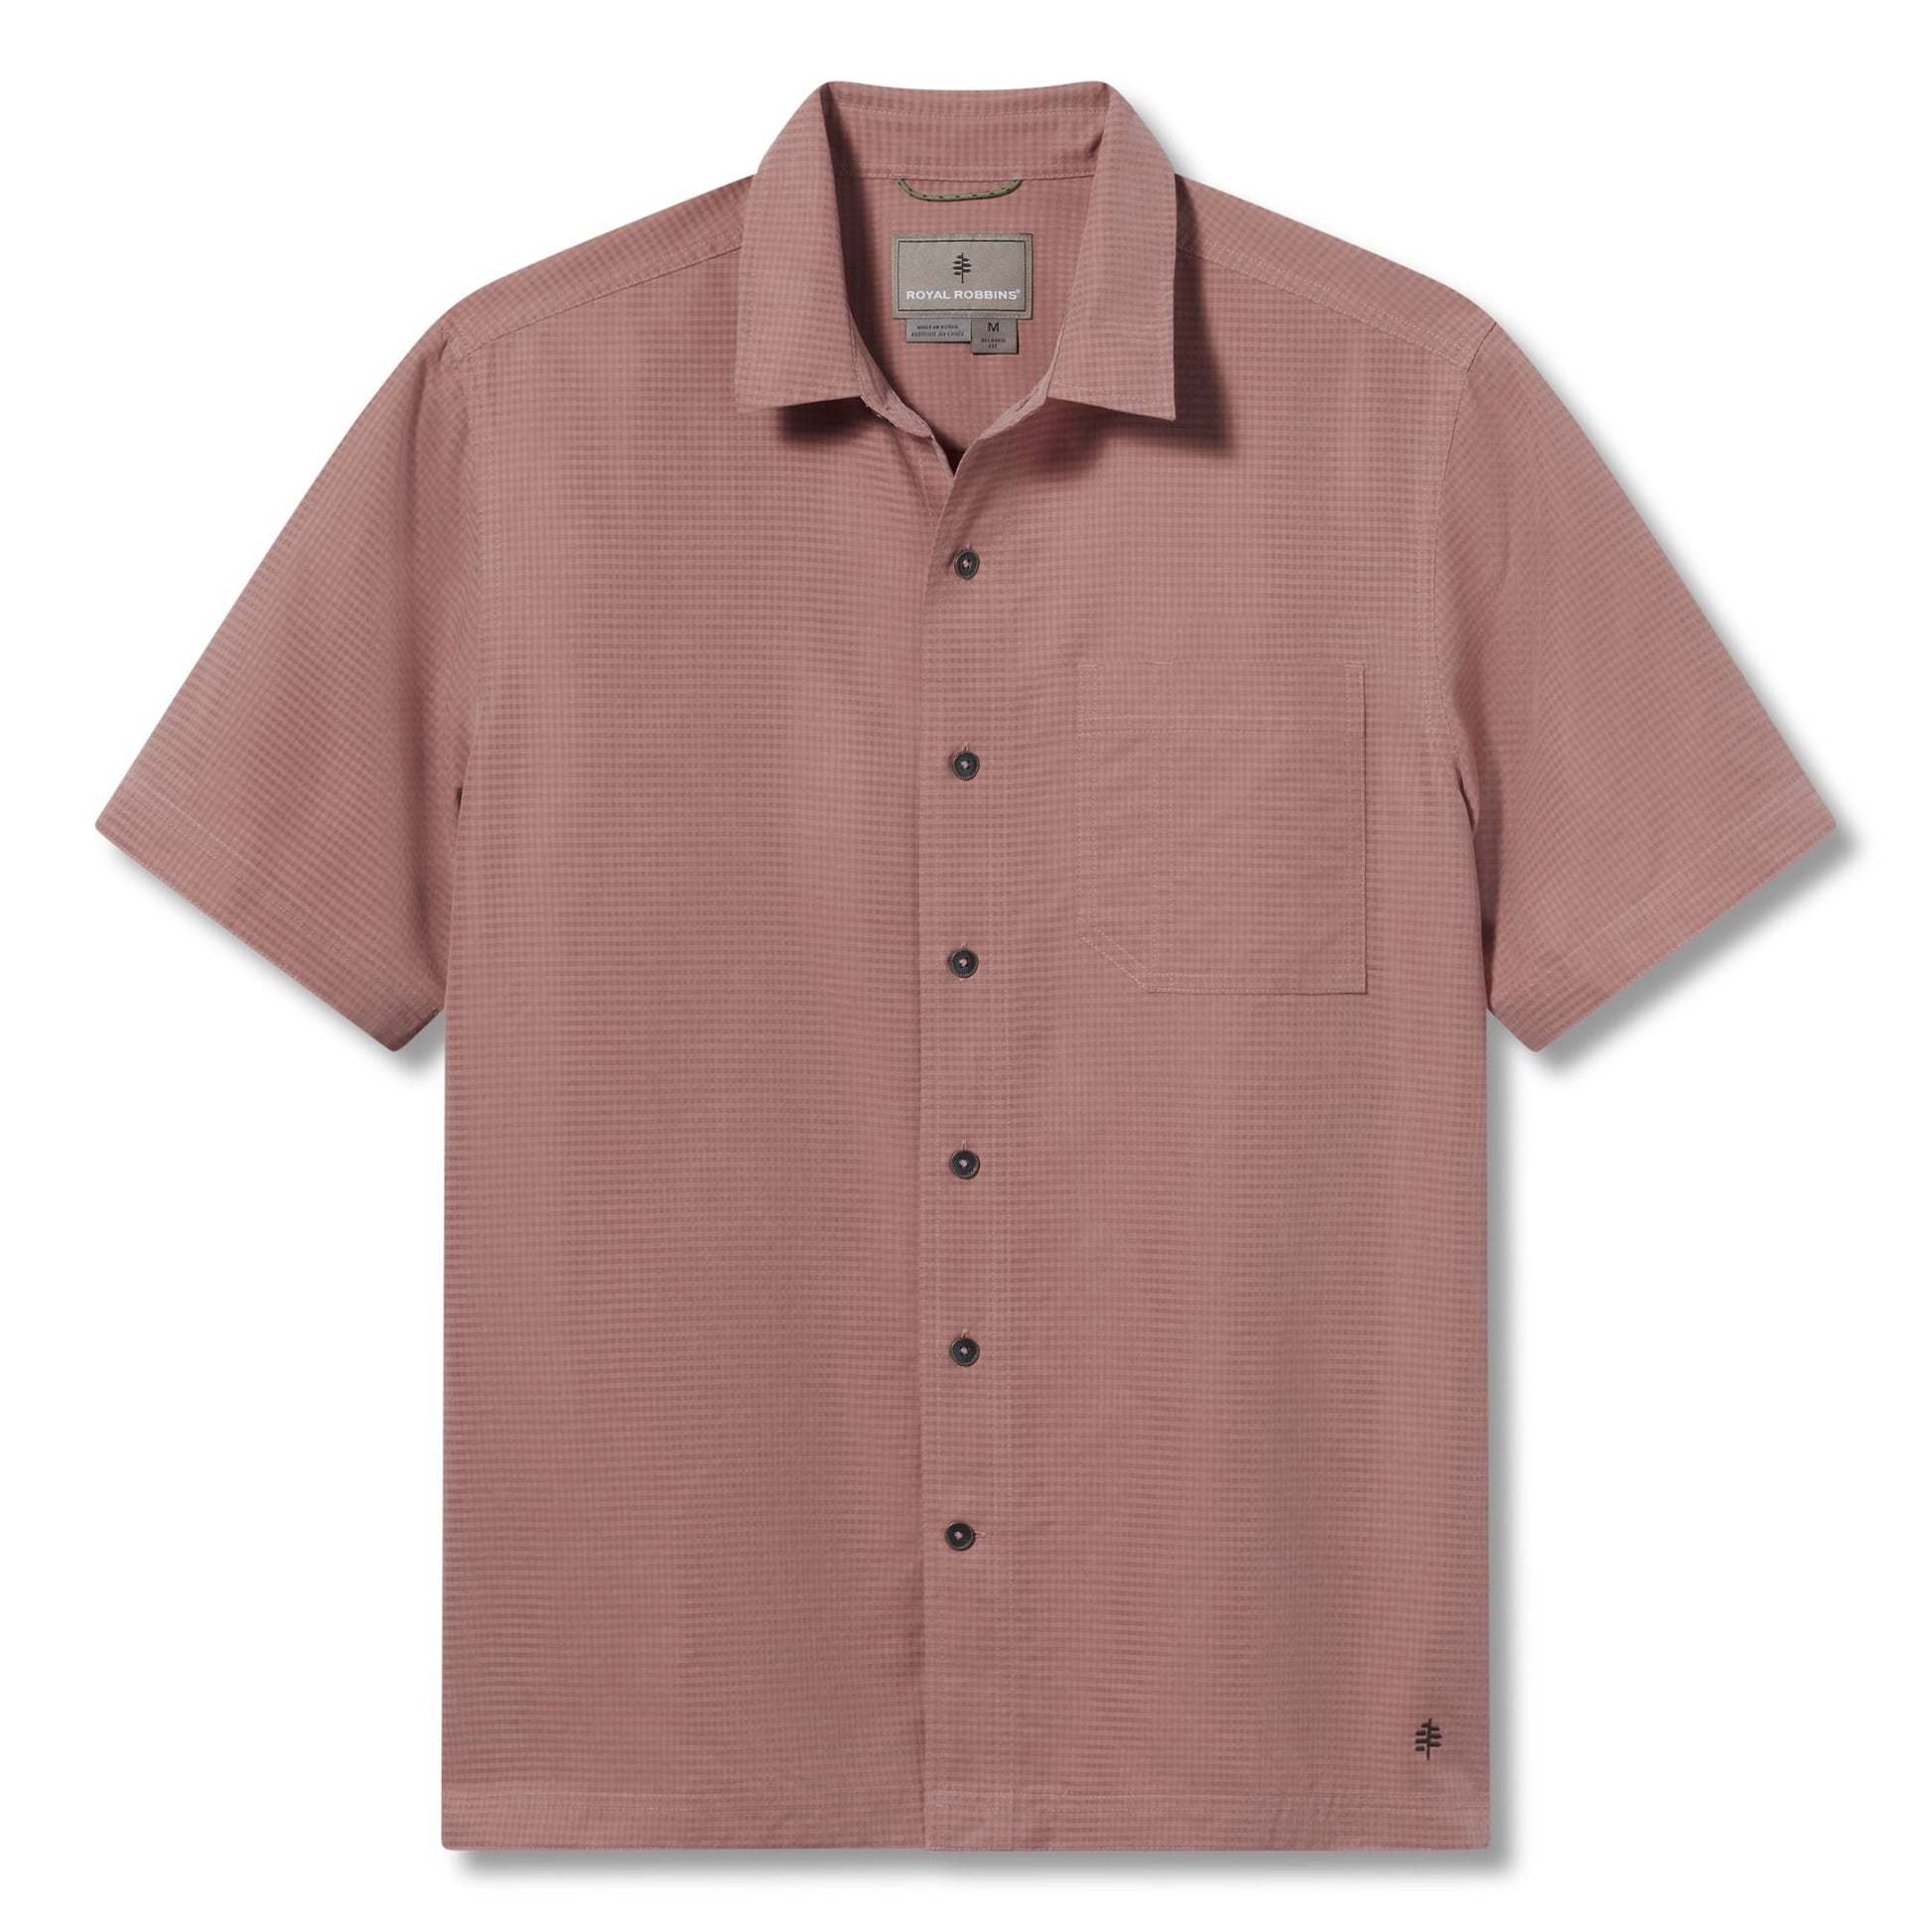 Royal Robbins Men's Desert Pucker Dry Short Sleeve Shirt